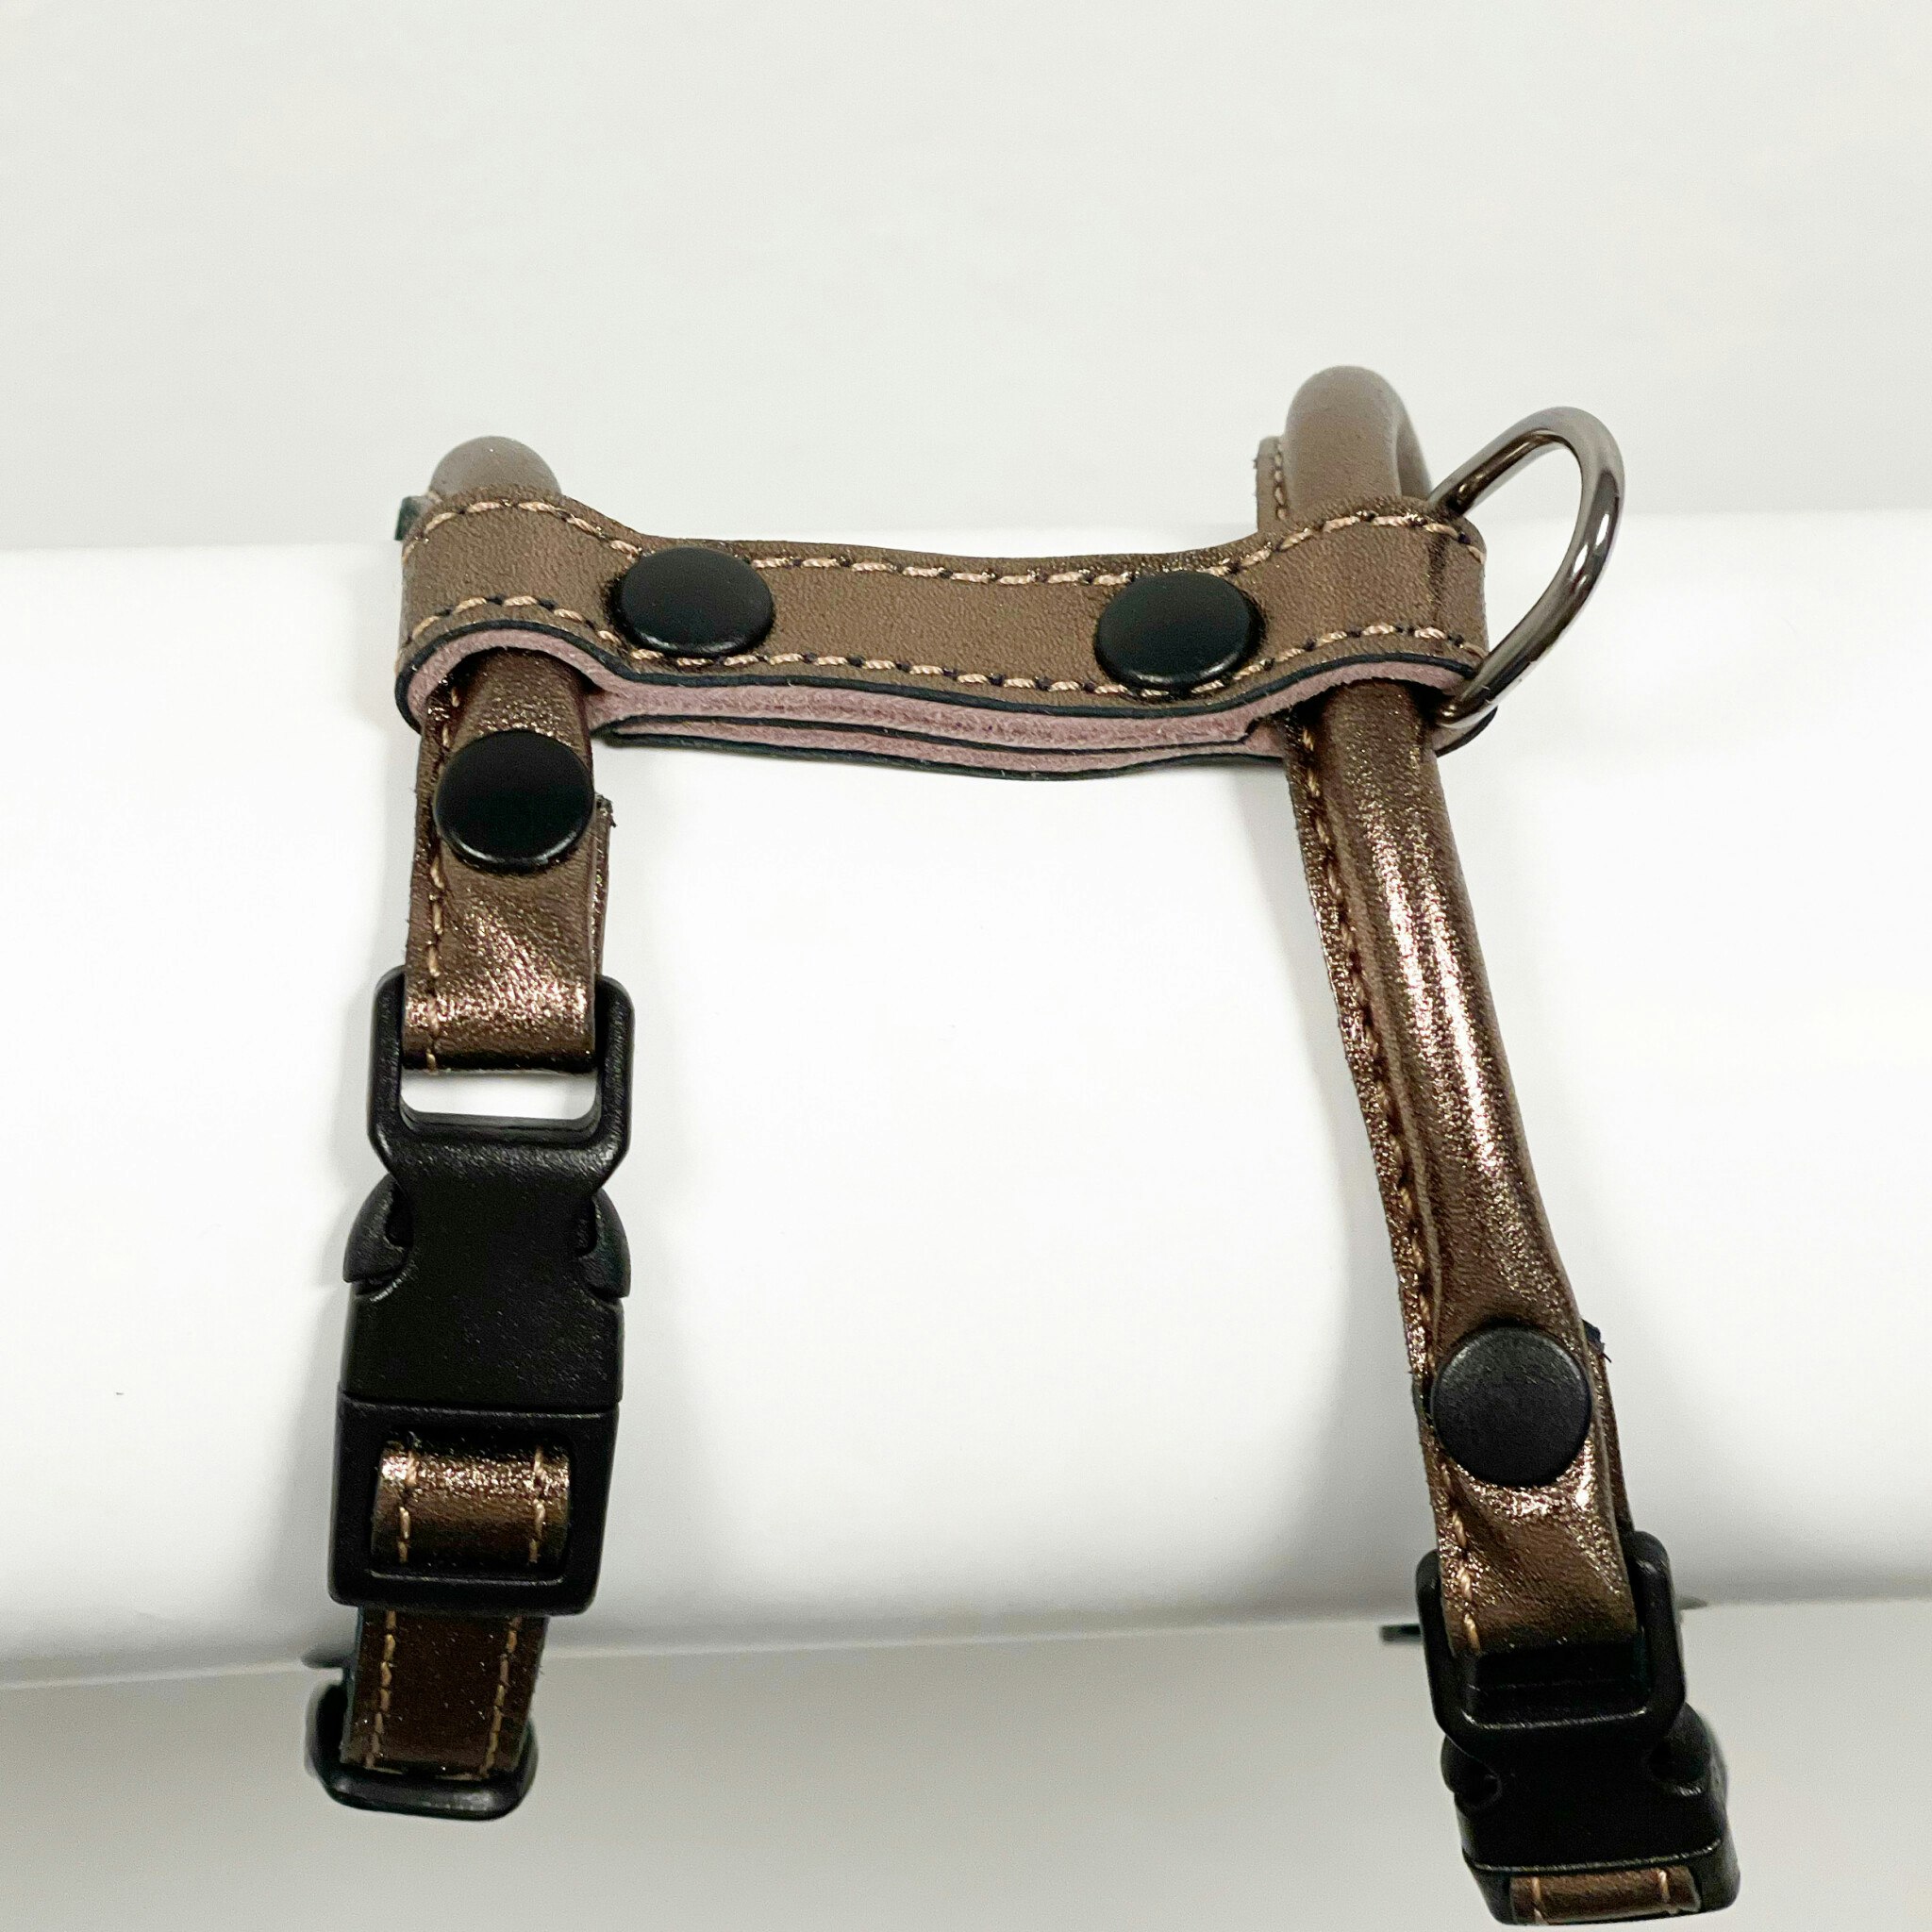 Del Mar Round Stitched Leather Harness Metallic Bronze